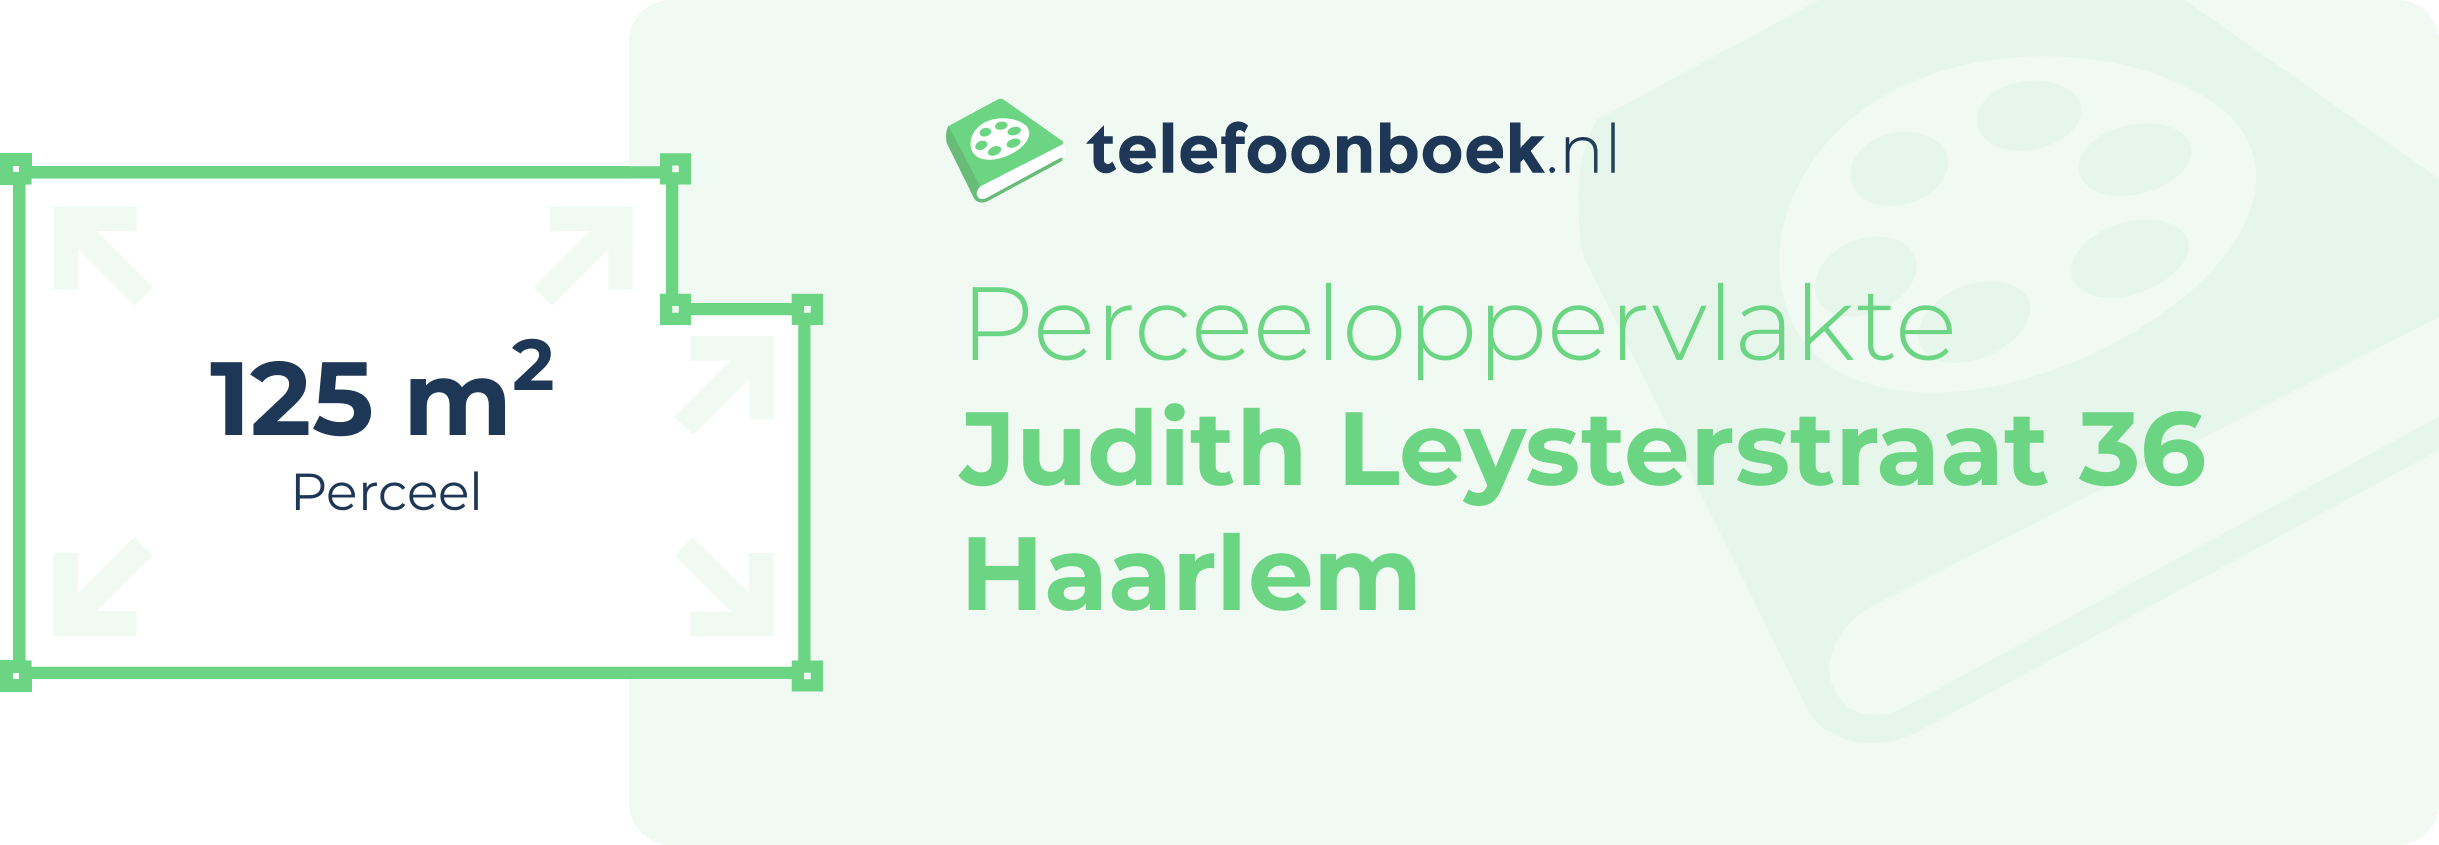 Perceeloppervlakte Judith Leysterstraat 36 Haarlem